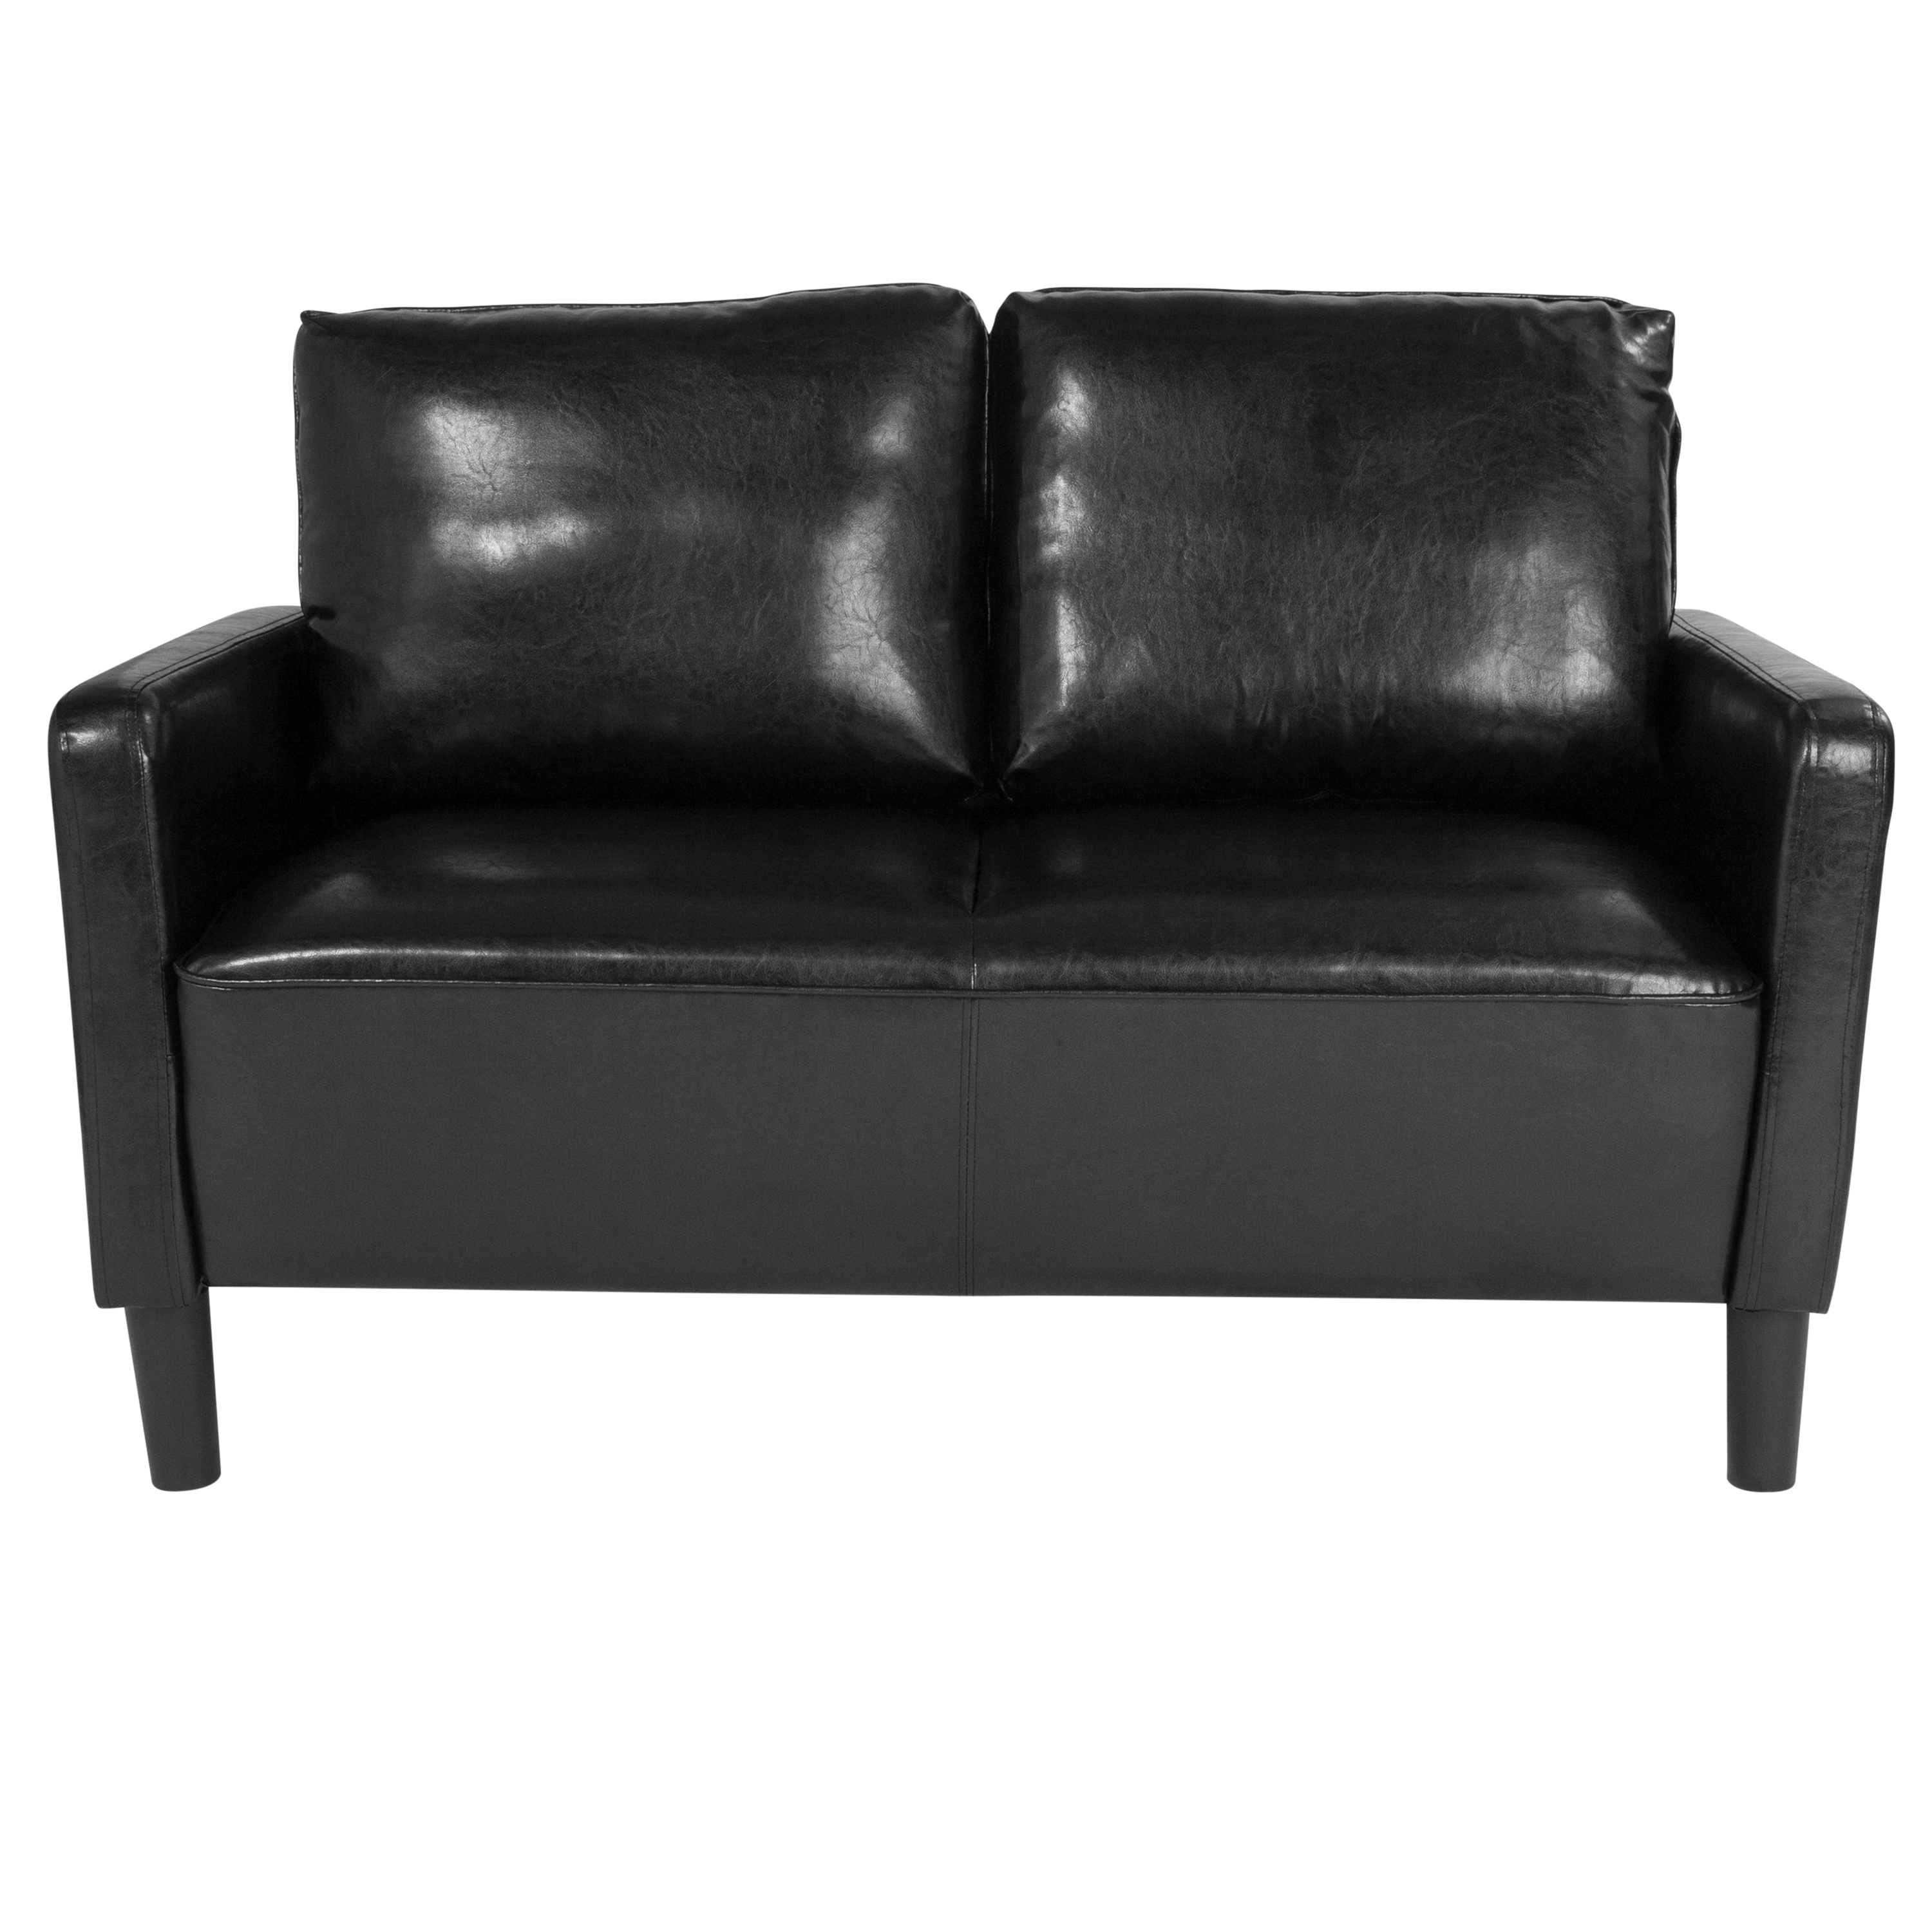 Flash Furniture Washington Park Upholstered Loveseat in Black LeatherSoft - image 5 of 5